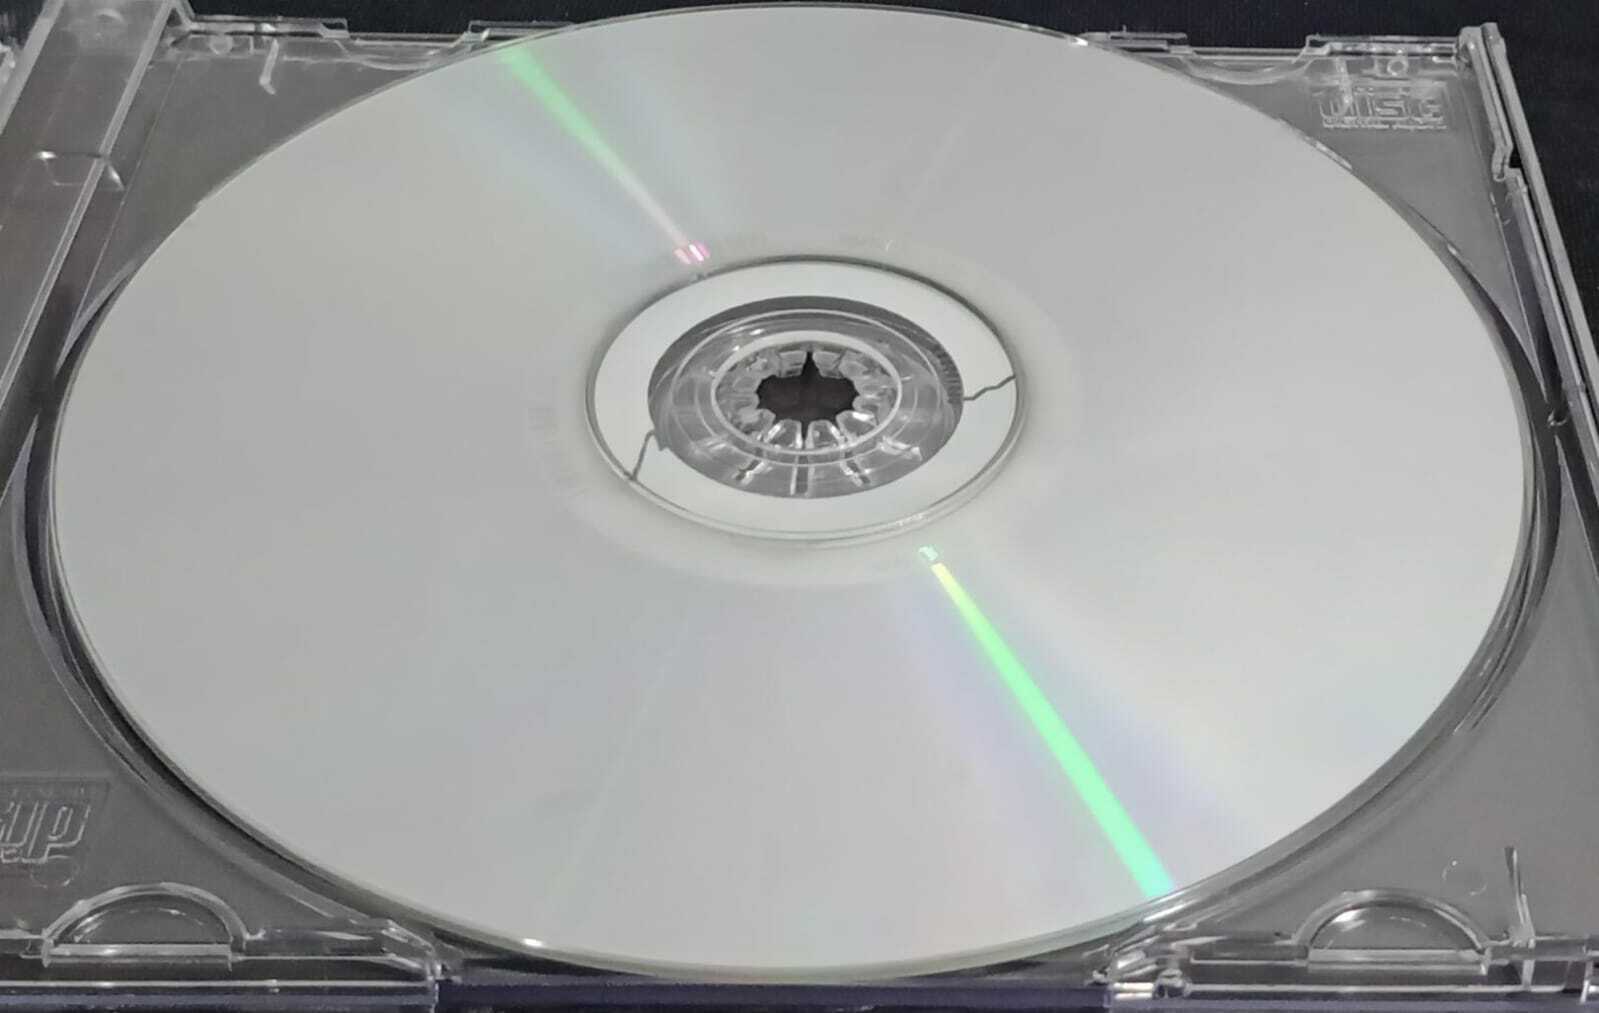 CD - Lacrimosa - Revolution